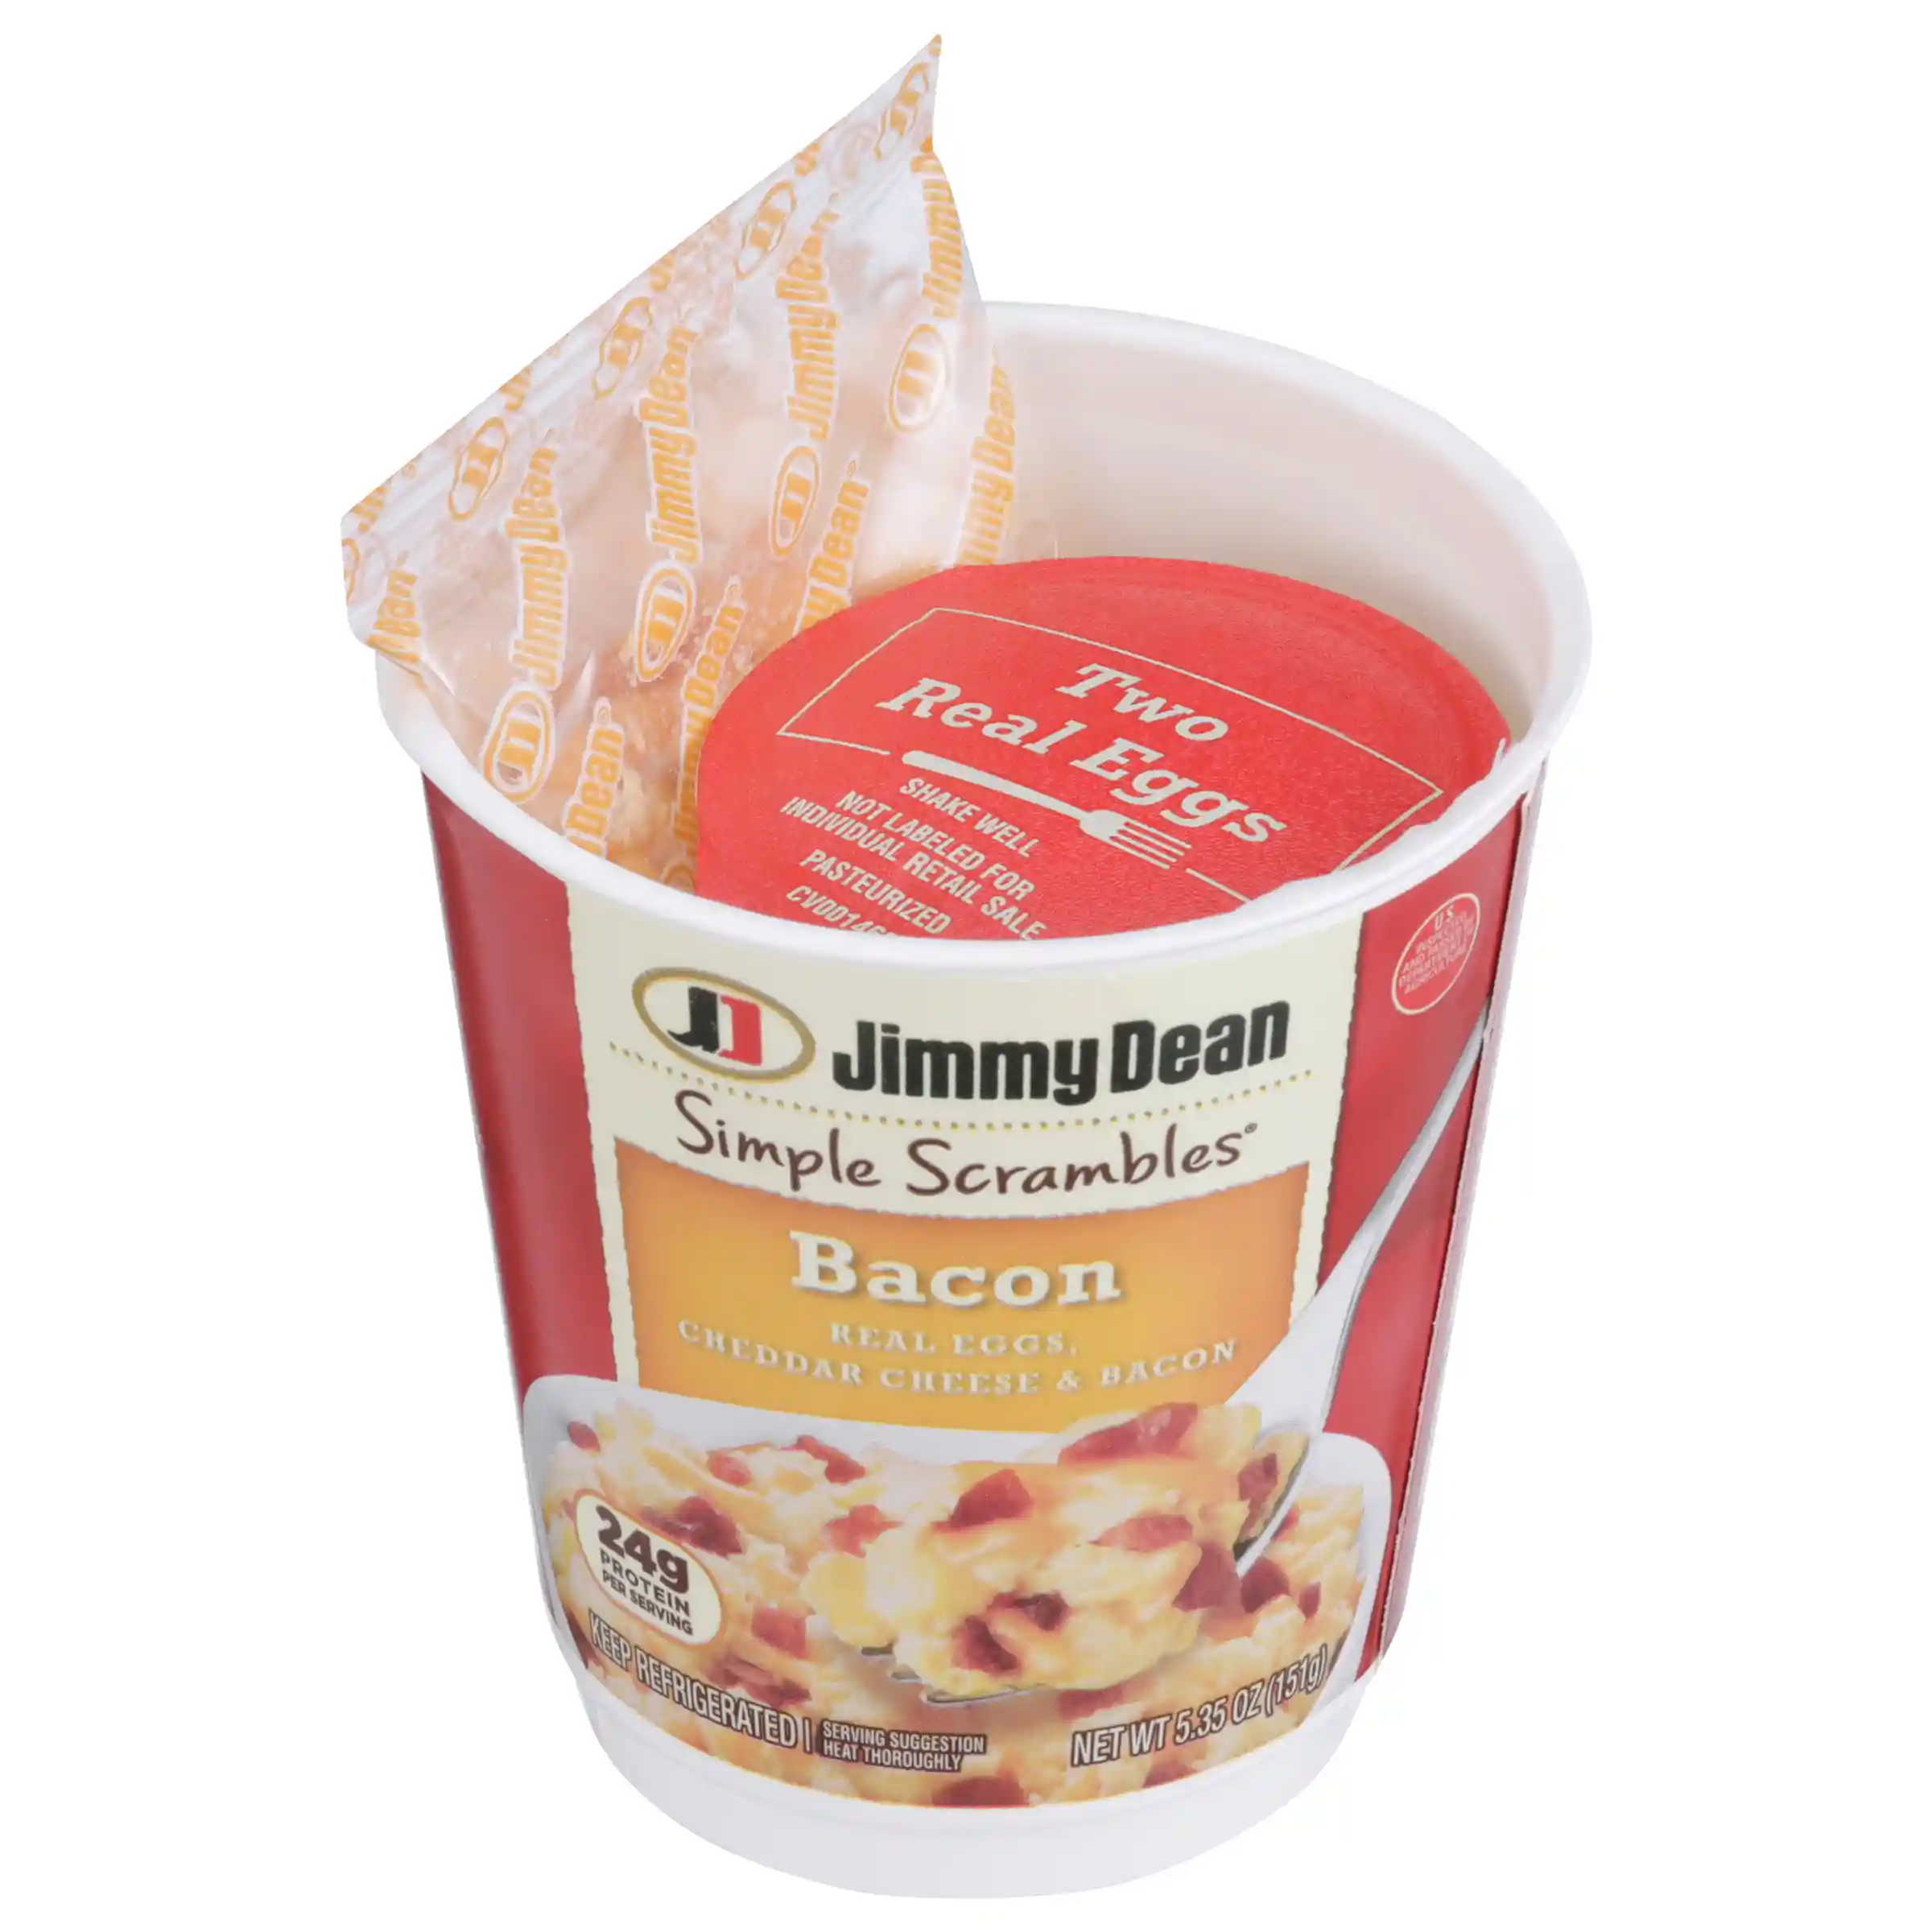 Jimmy Dean Simple Scrambles® Bacon, 5.35 oz.https://images.salsify.com/image/upload/s--oN8pzGBj--/q_25/fnbfoij5f3ictjkqq8xv.webp